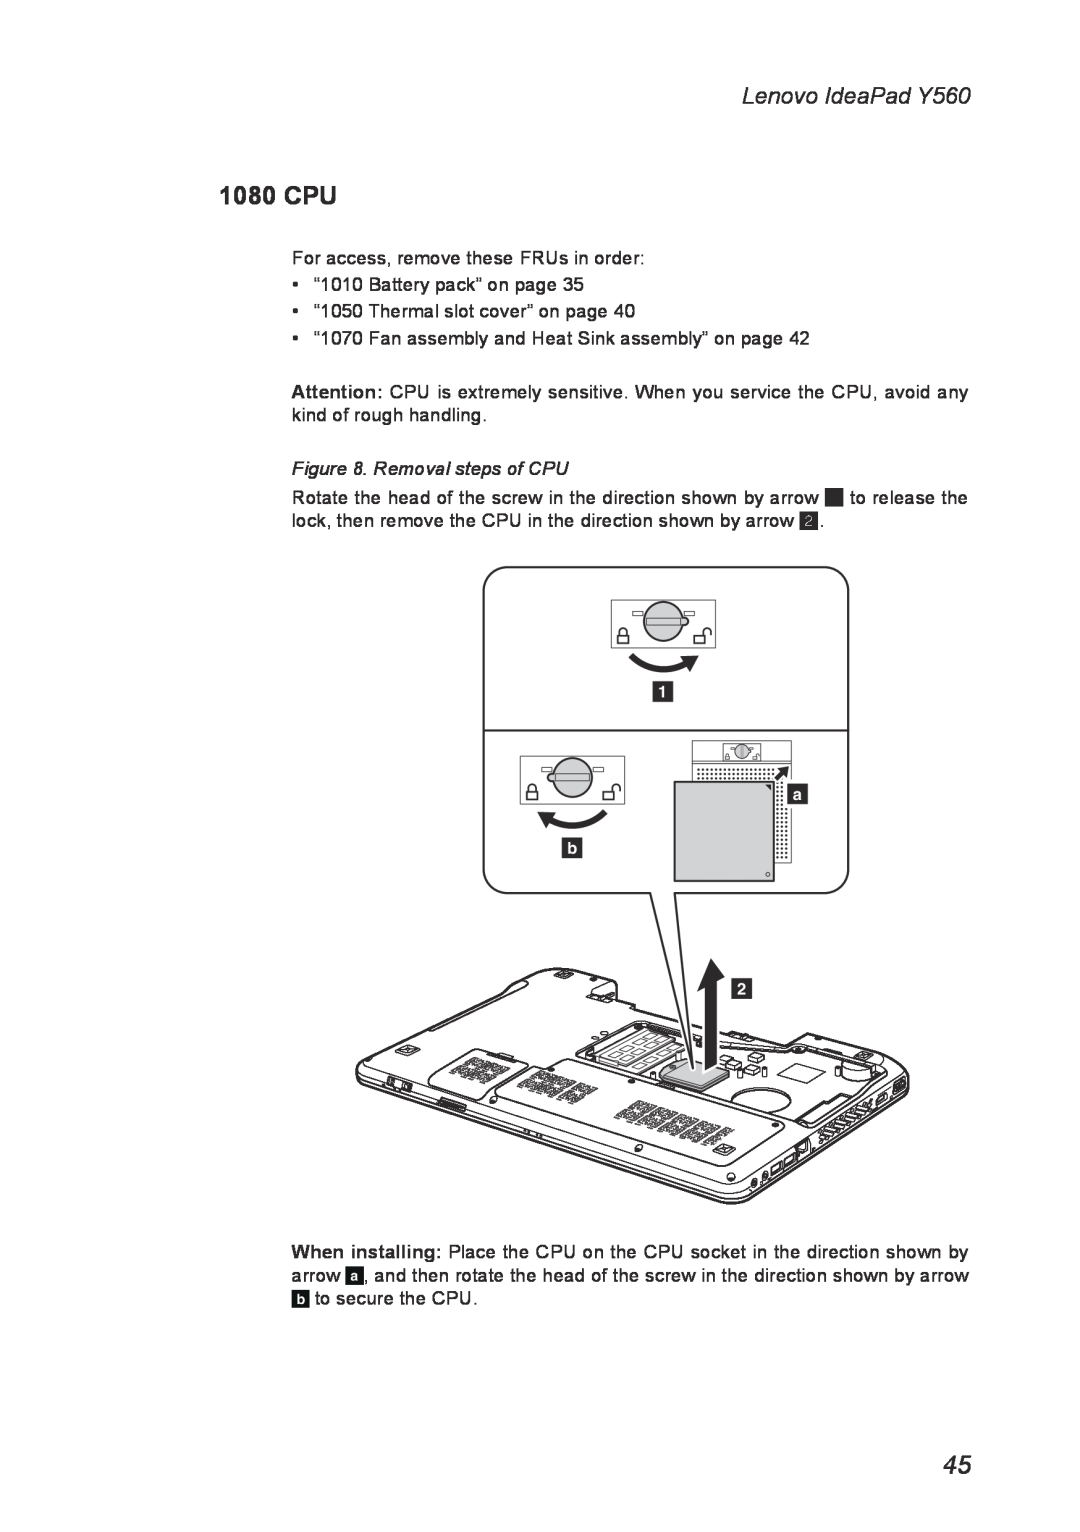 Lenovo manual 1080 CPU, Removal steps of CPU, Lenovo IdeaPad Y560 